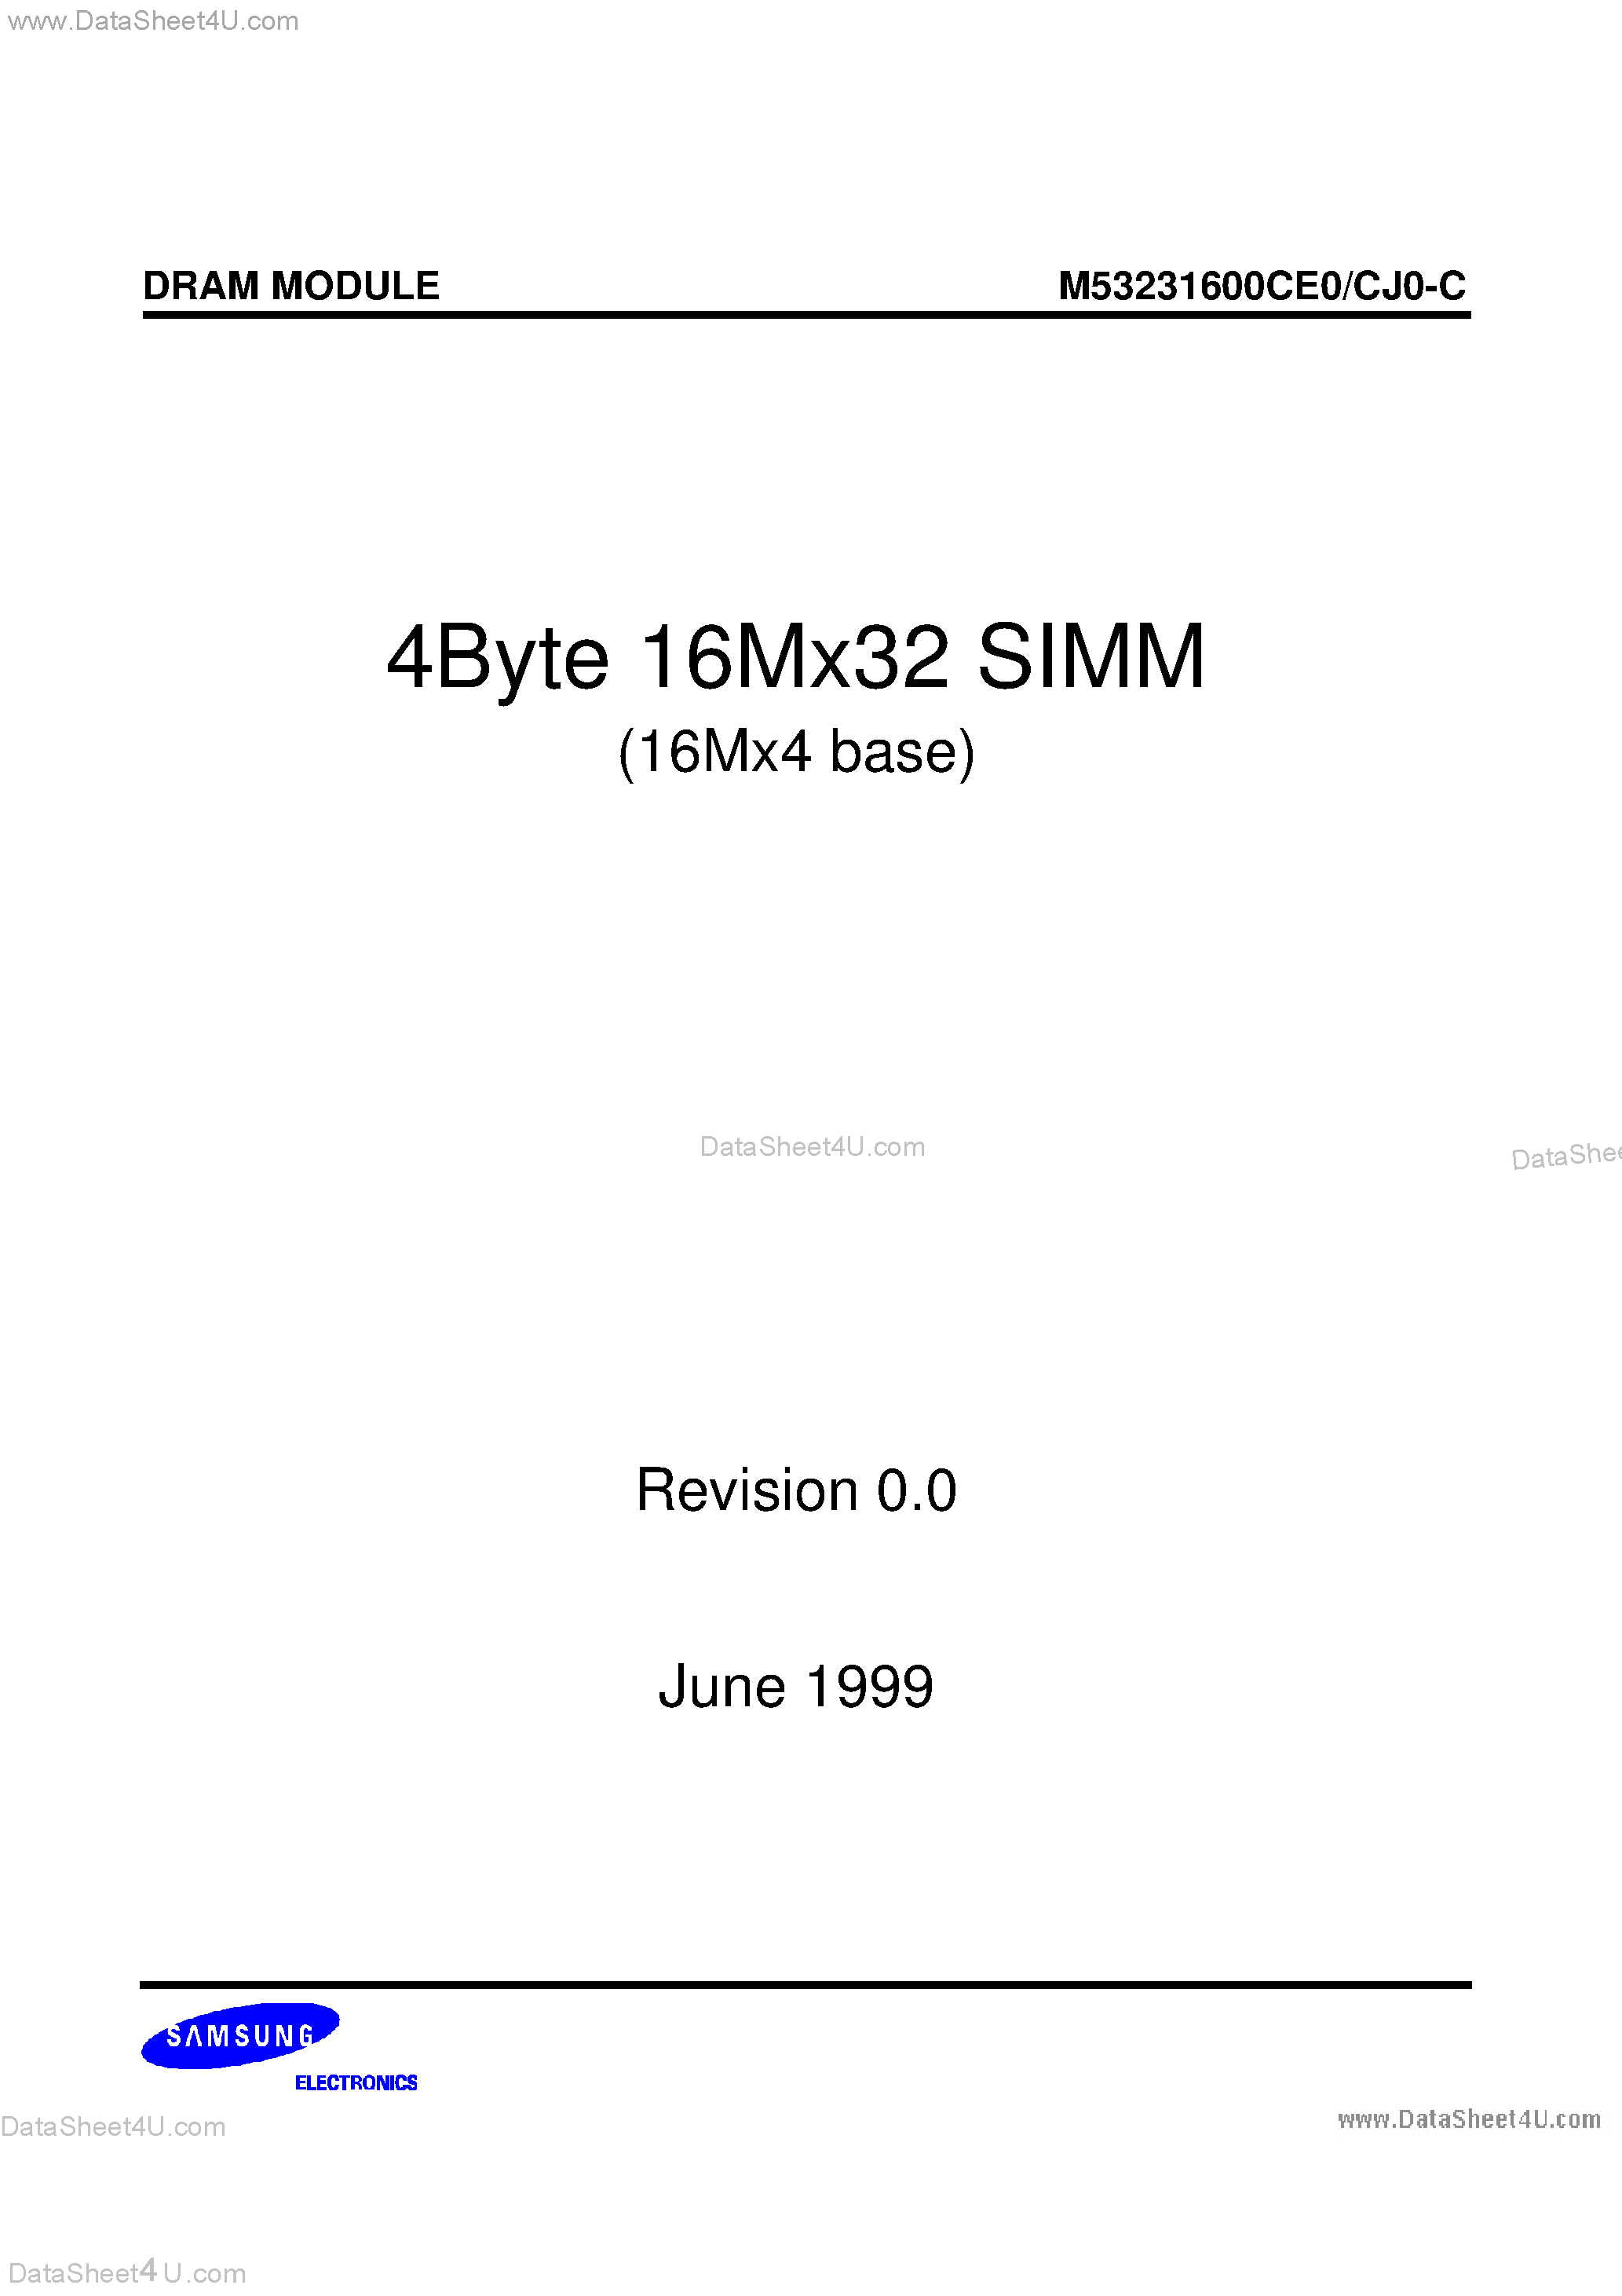 Даташит M53231600CE0 - (M53231600CE0/CJ0-C) DRAM Module страница 1